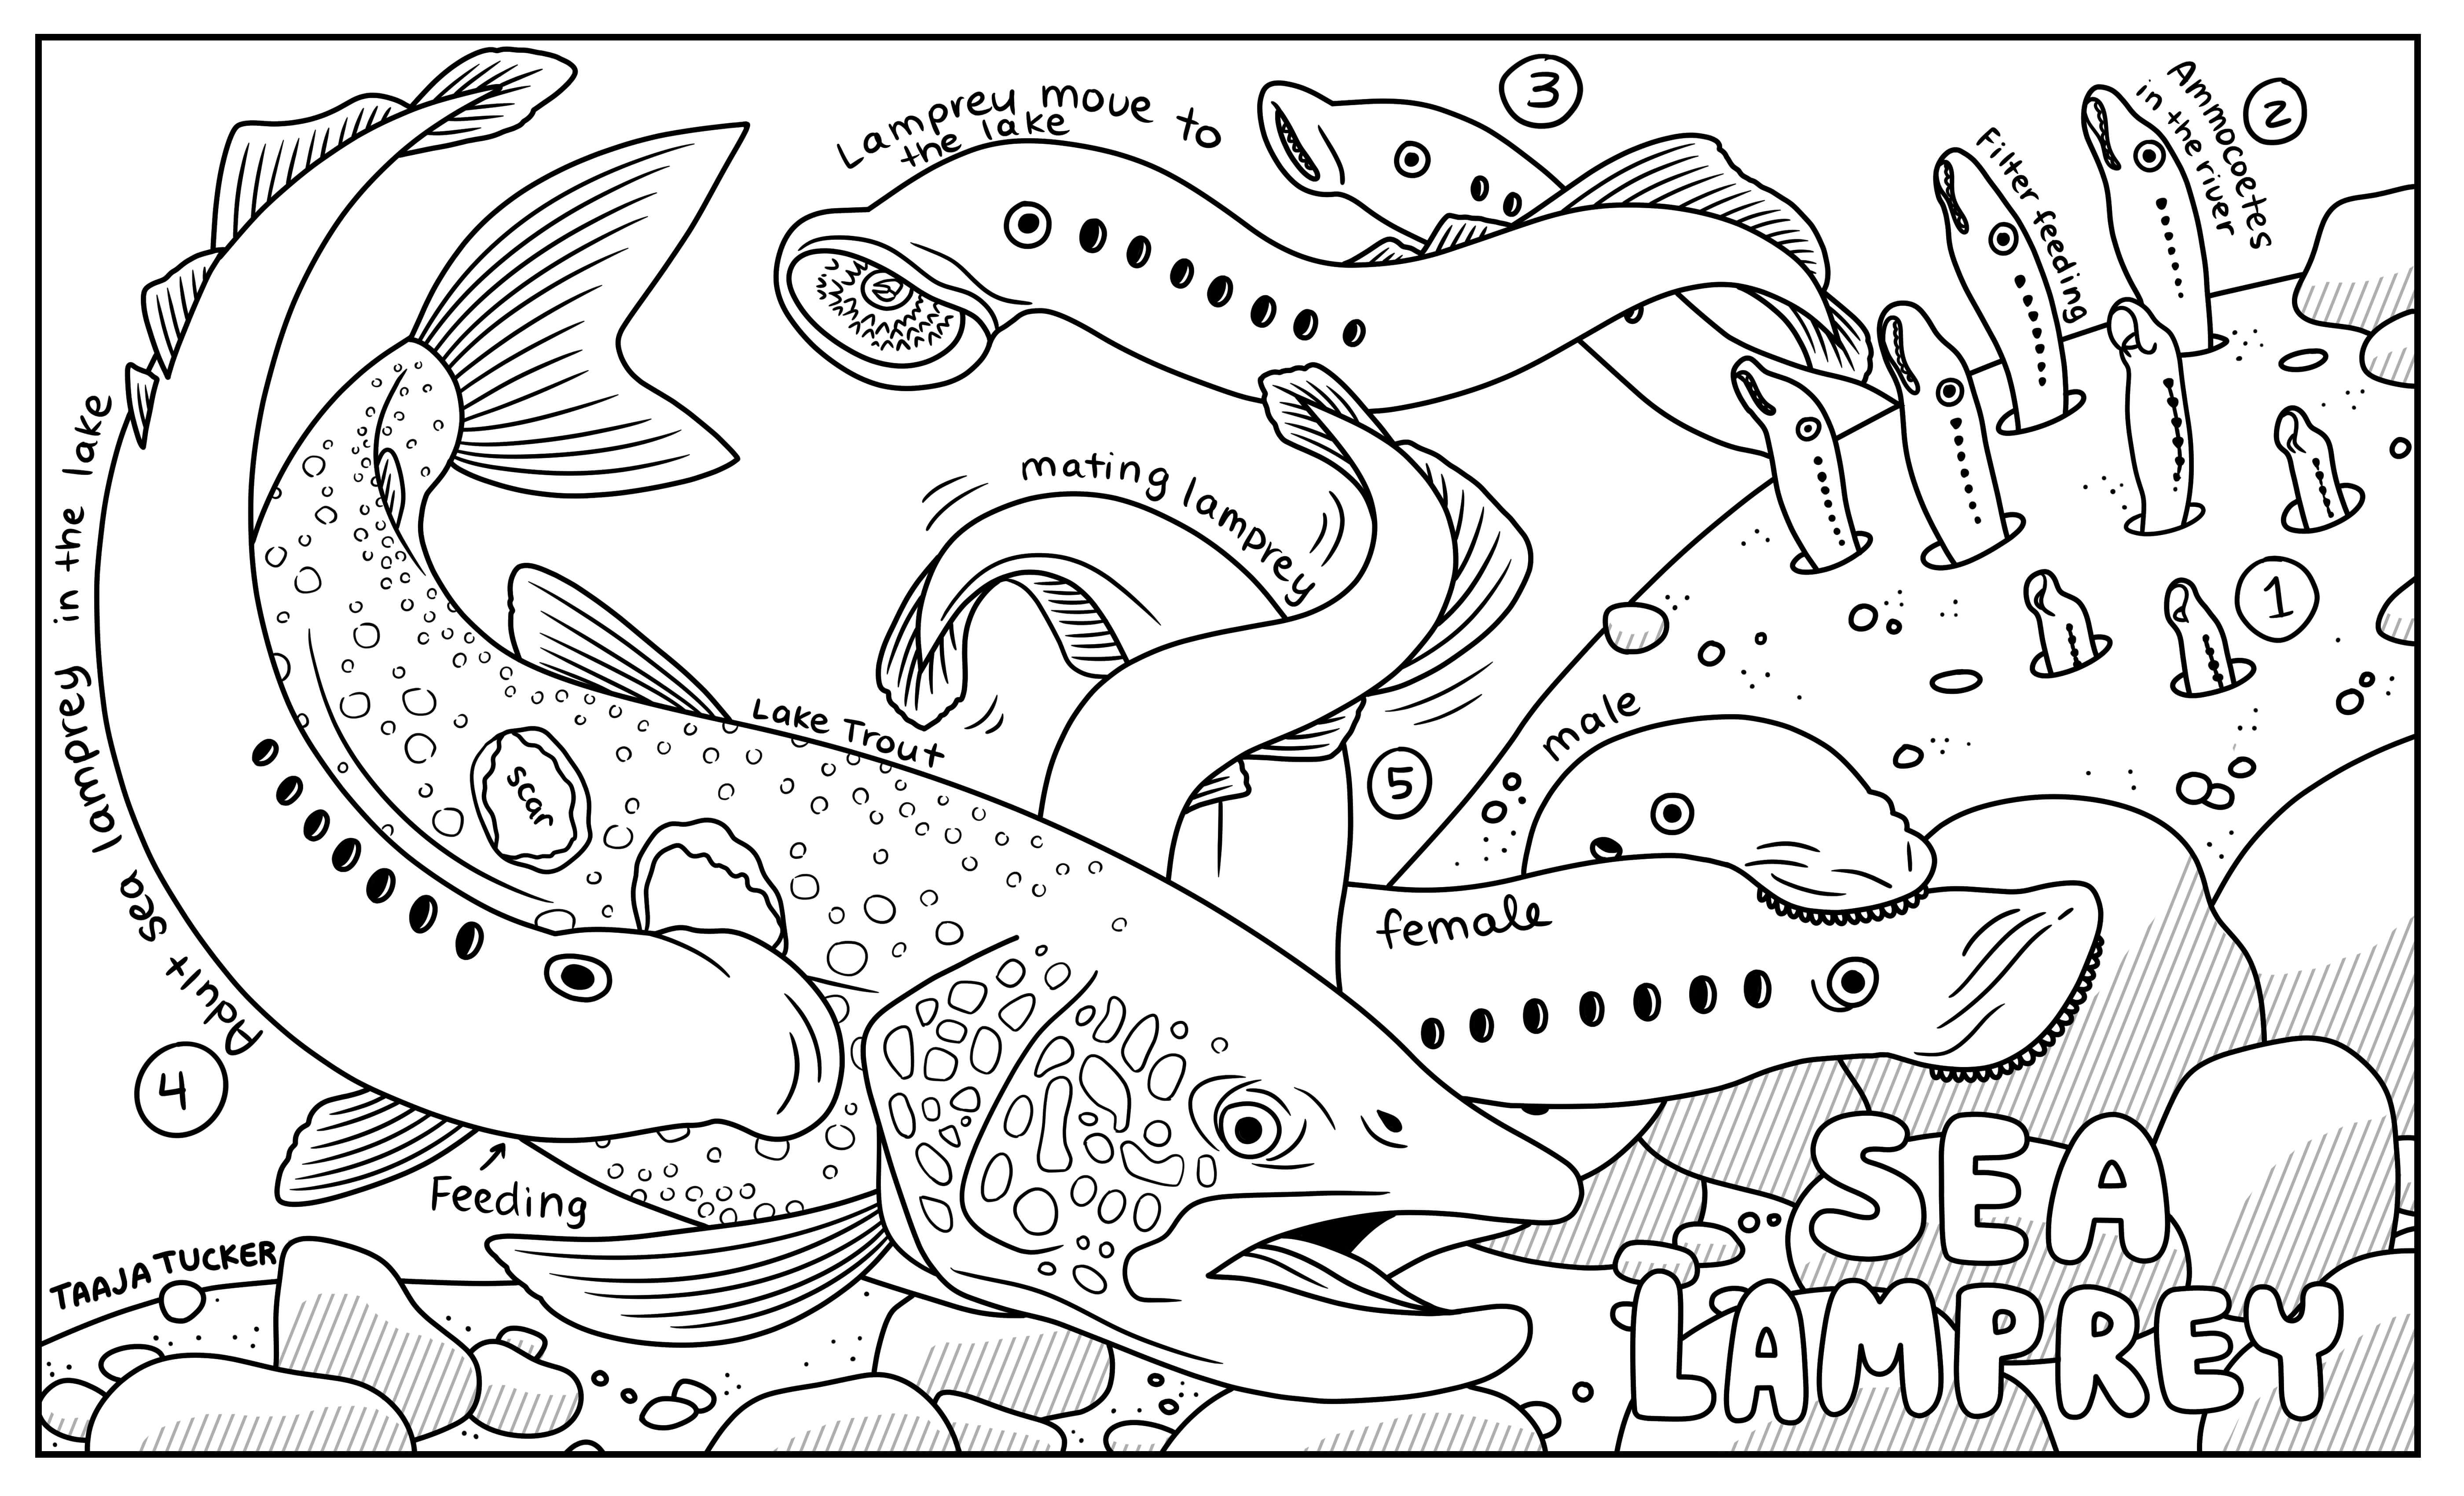 http://taajatucker.com/ColoringSheets/Sea_lamprey_guide.jpg